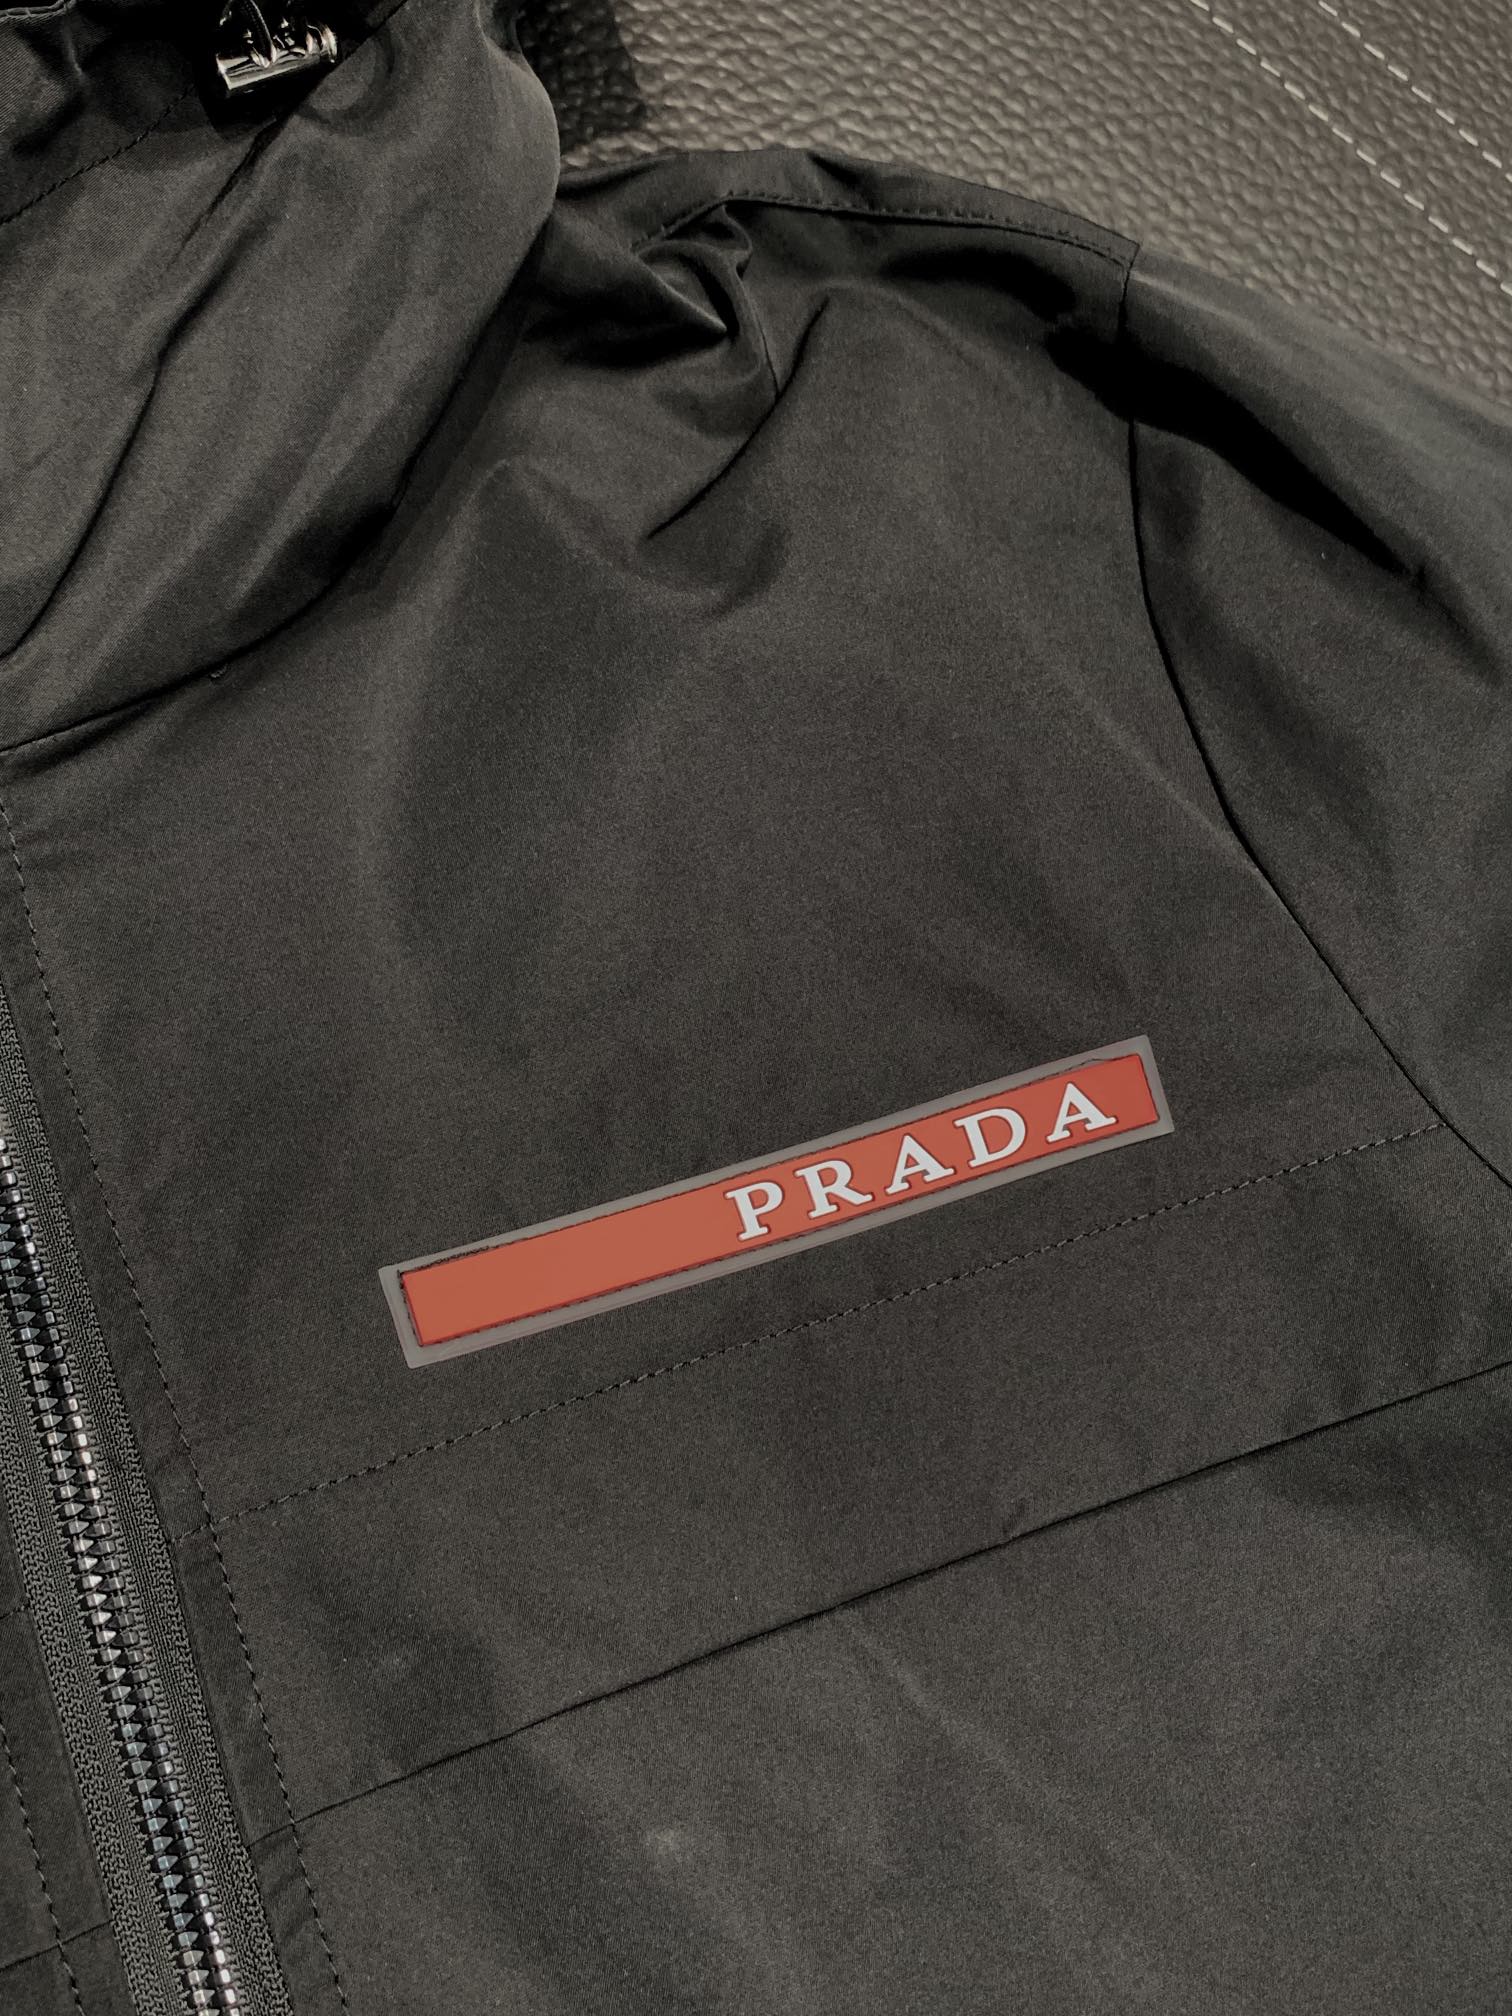 Prada普拉达独家专供最新四季时尚连帽夹克休闲经典拉链外套经典设计感与颜值爆棚的外套品质更是无法挑剔品